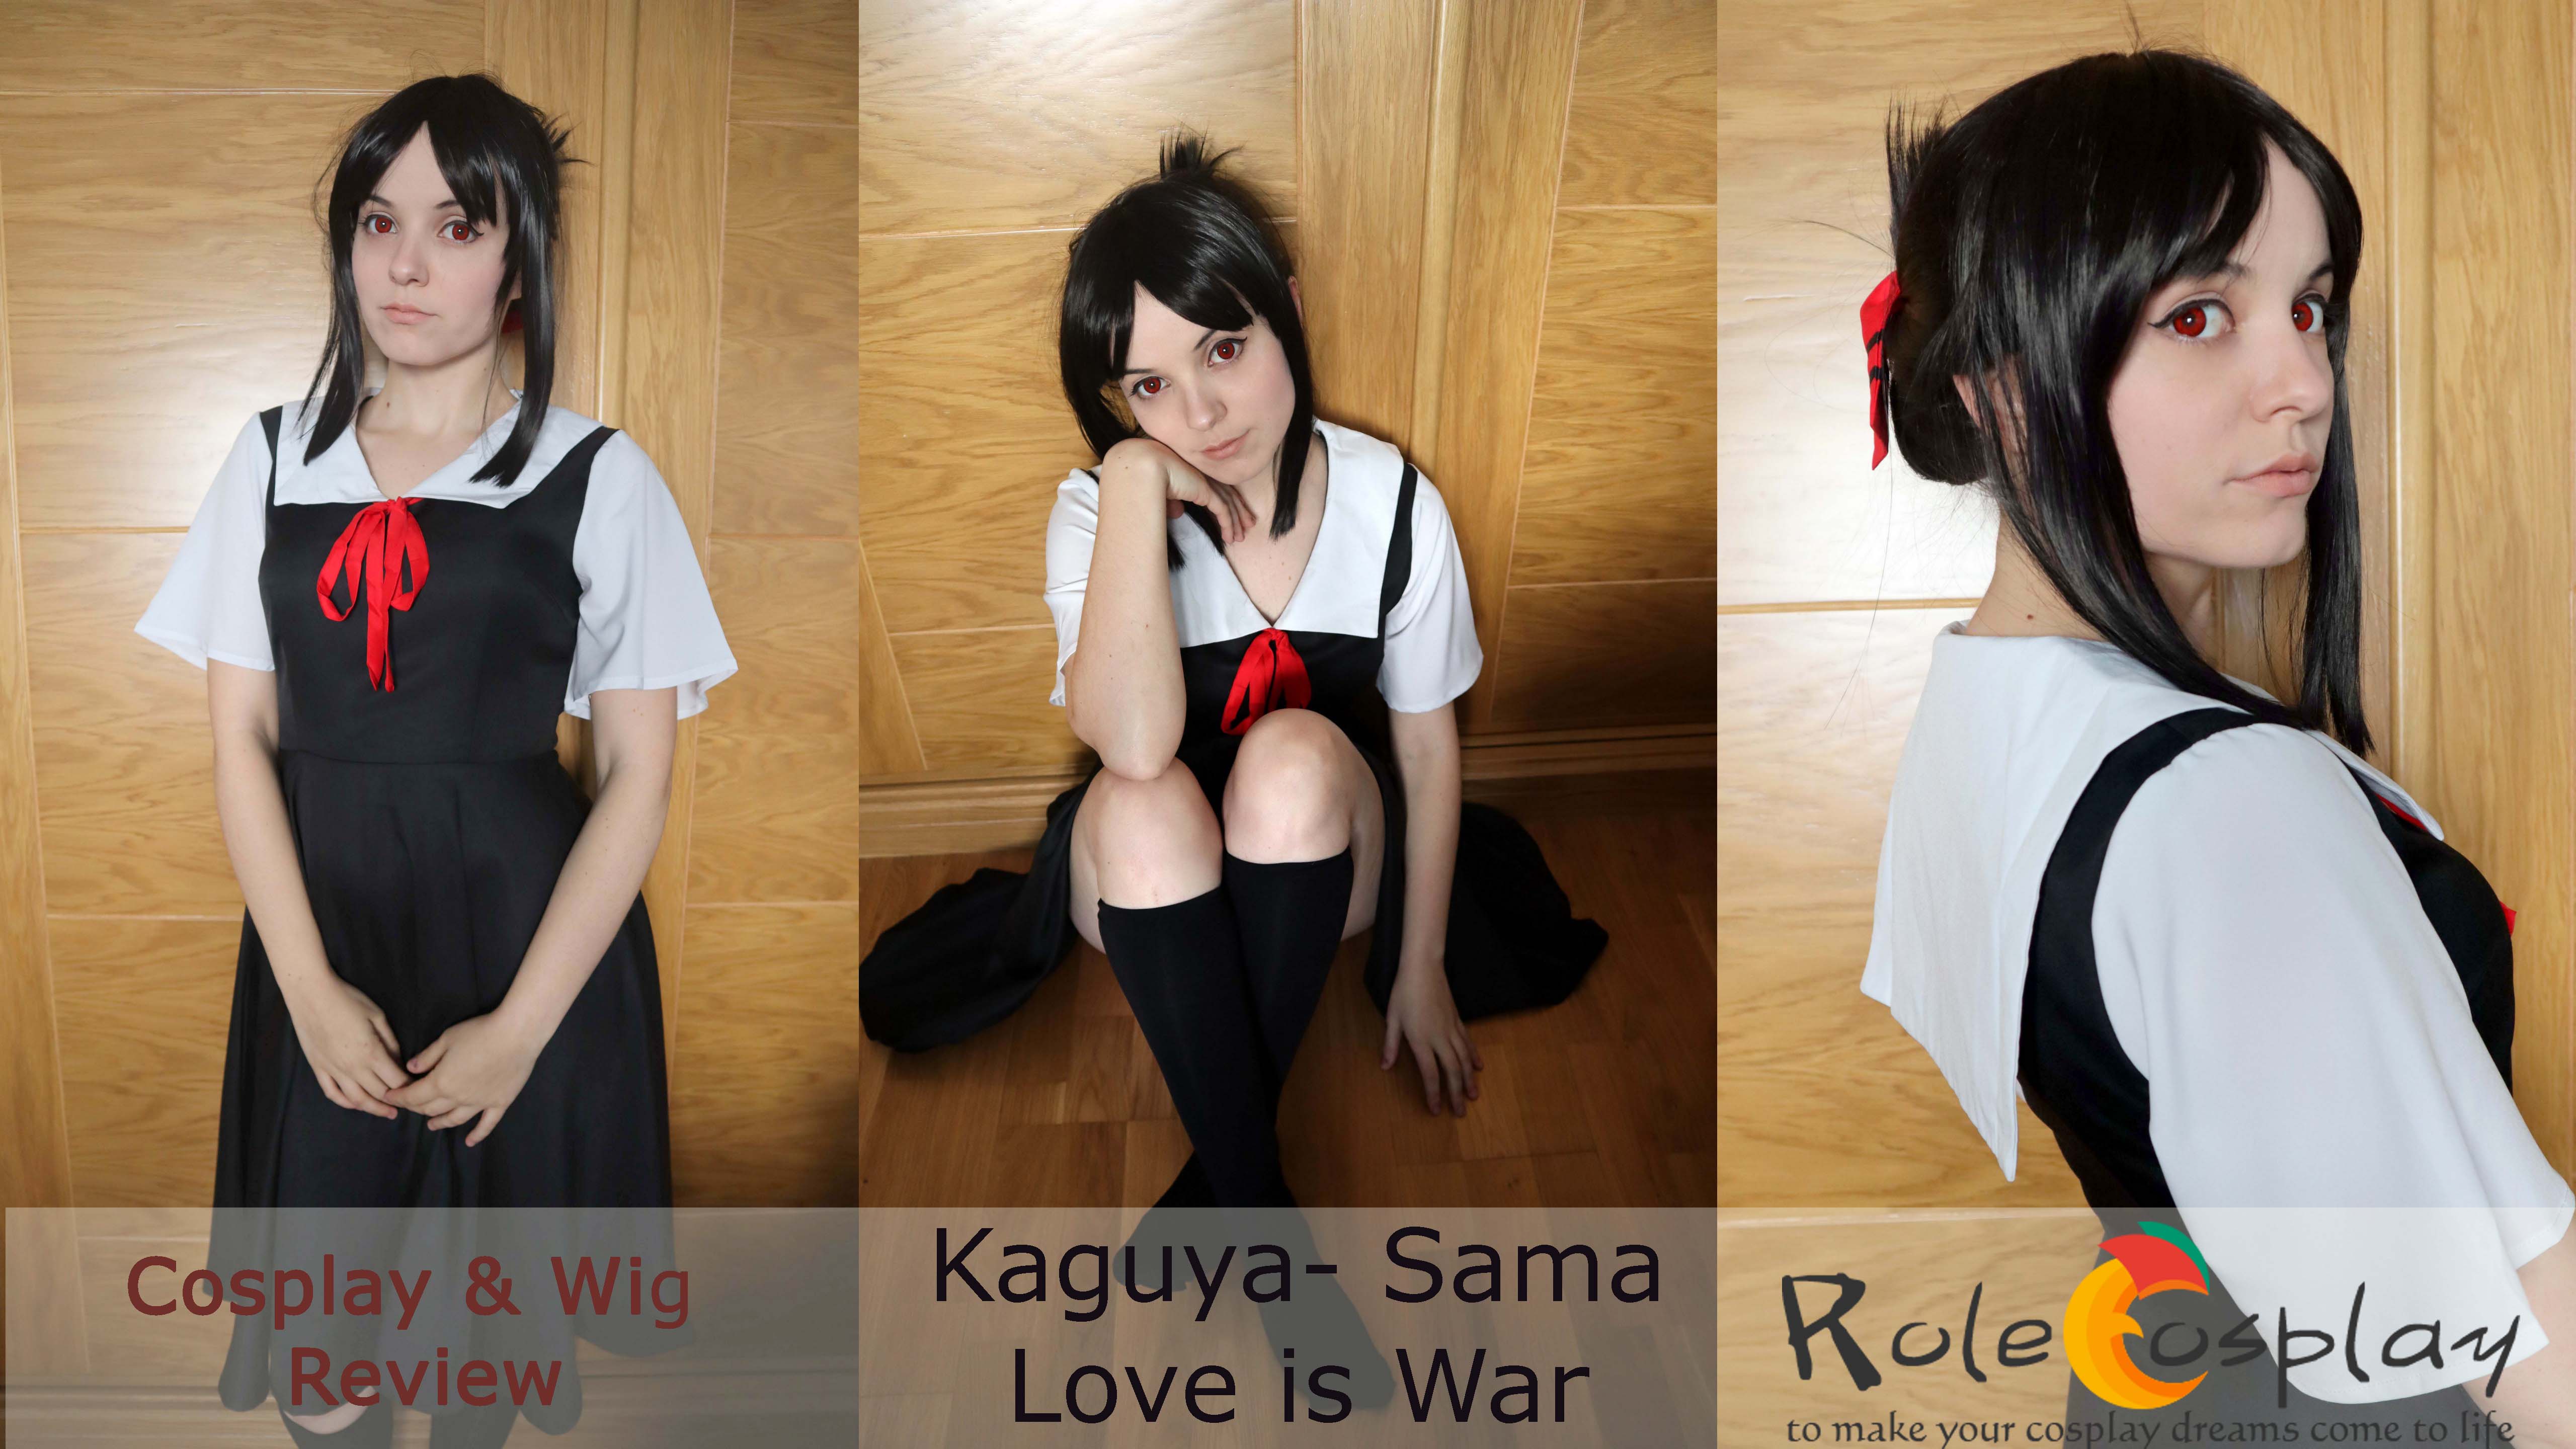 Cosplay review: Kaguya-sama from Kaguya-sama Love is war from Rolecosplay